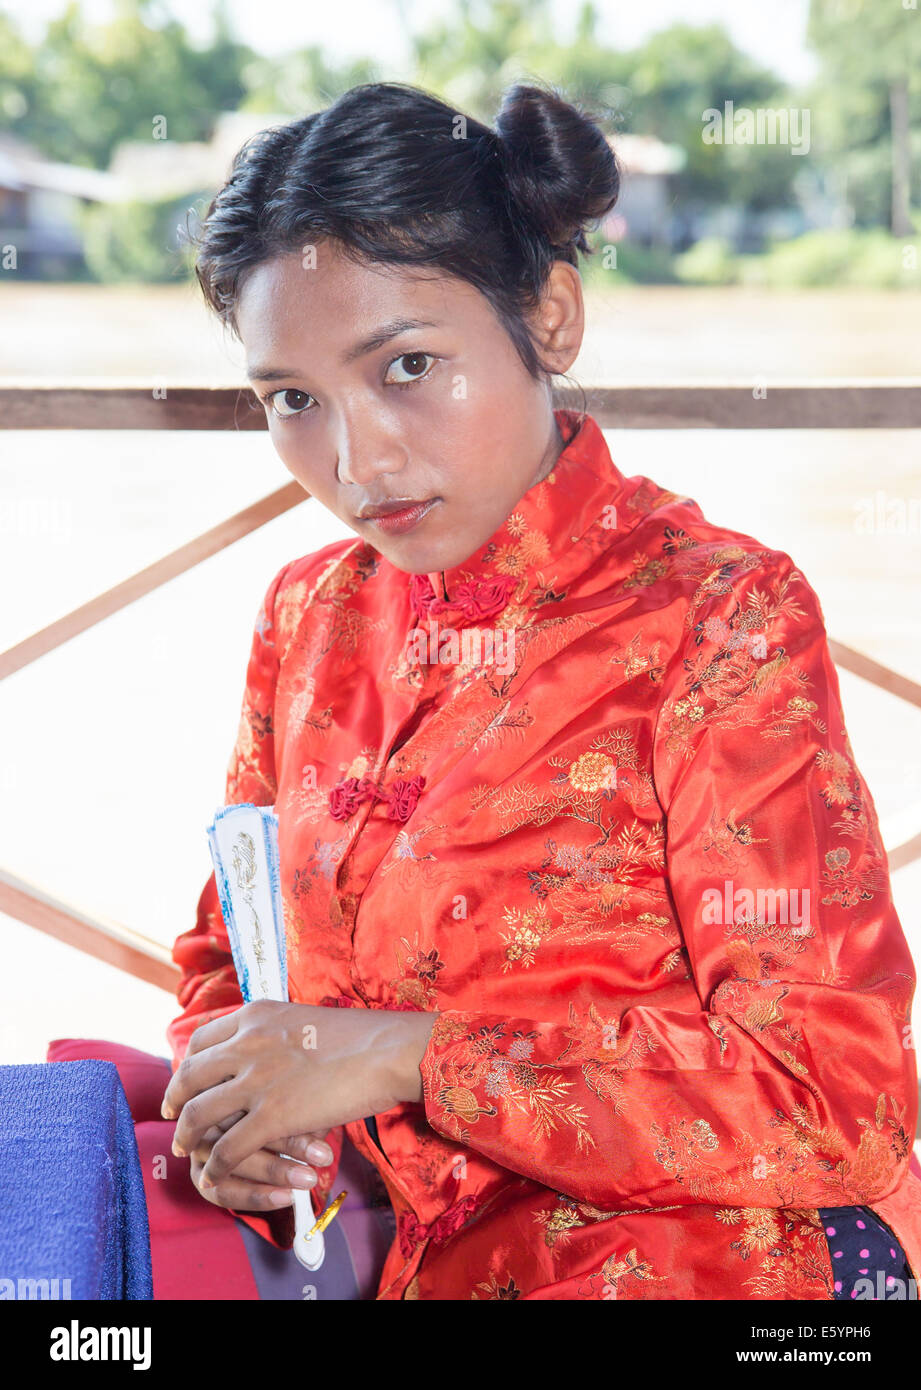 Asian woman holding fan Stock Photo